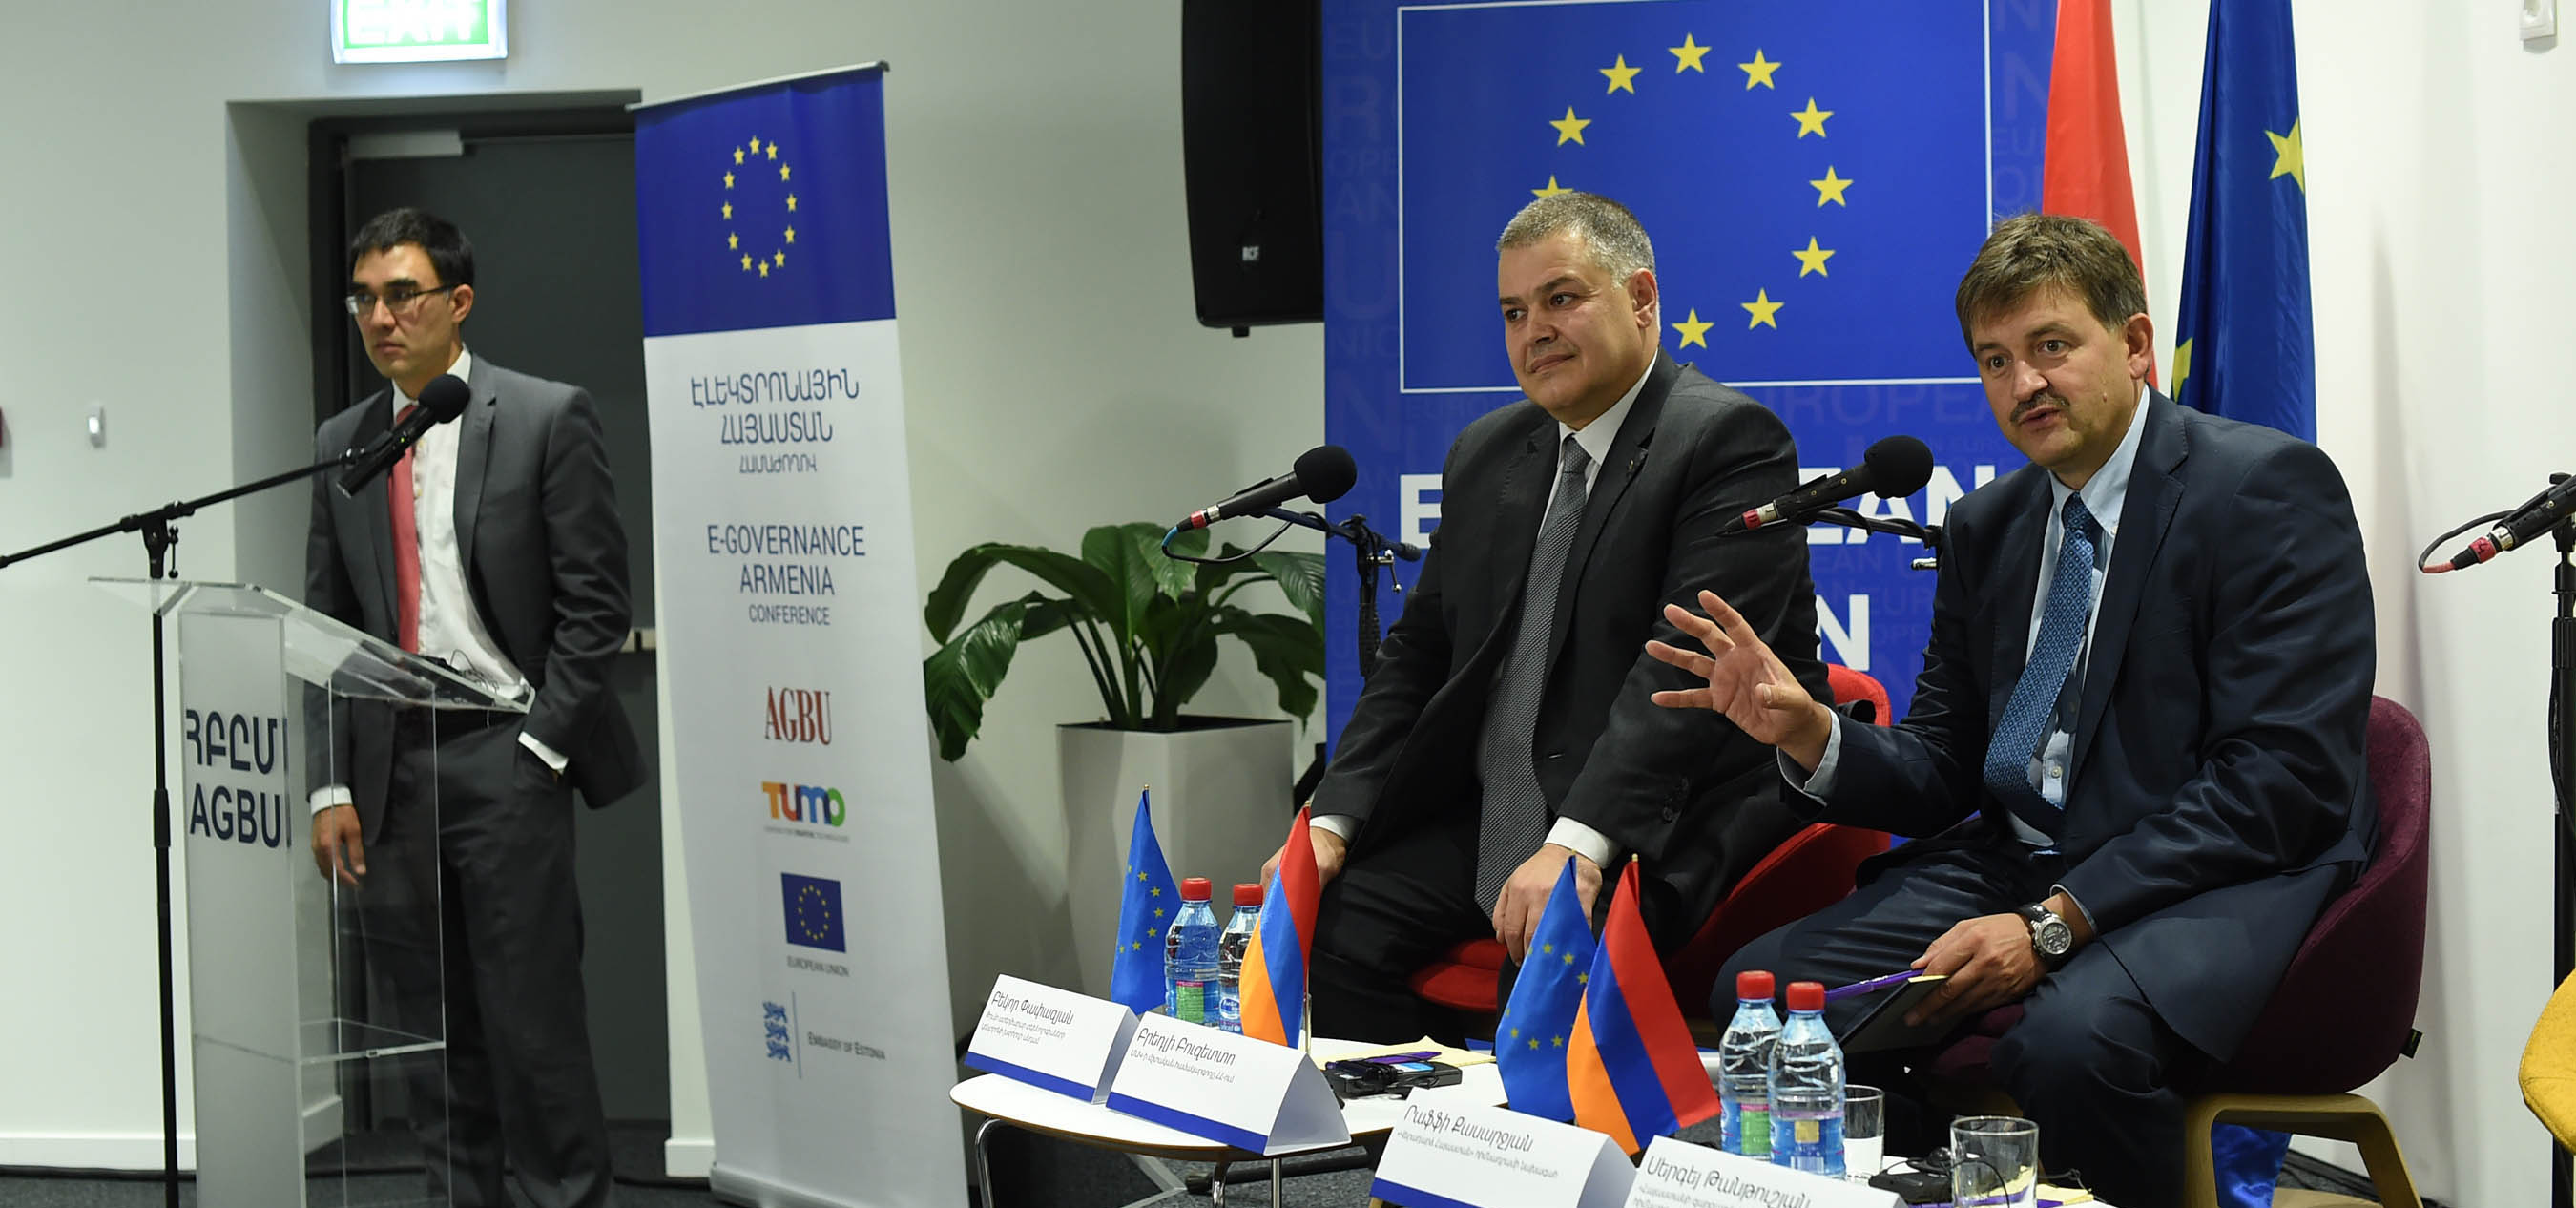 AGBU Yerevan hosts EU E-Governance conference in Armenia